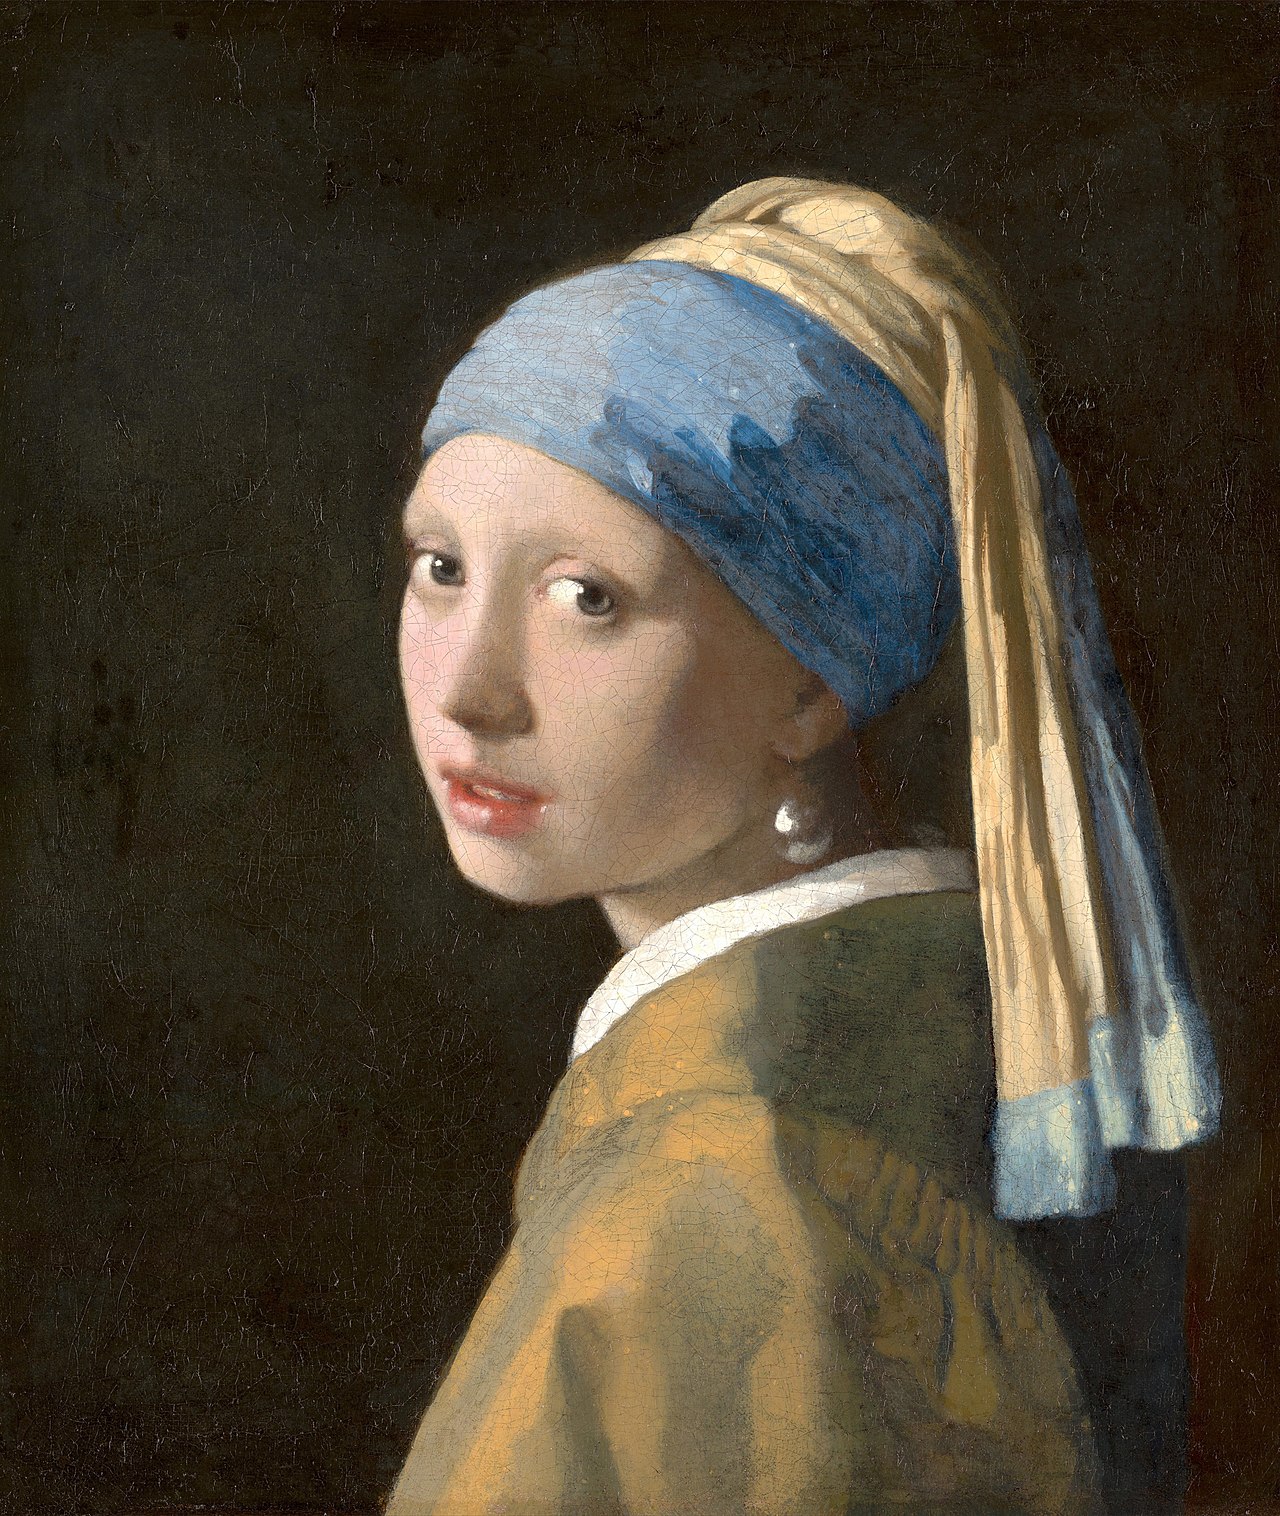 'Girl With A Pearl' (Dutch: Meisje met de parel) is an oil painting by Dutch Golden Age painter Johannes Vermeer, dated c. 1665